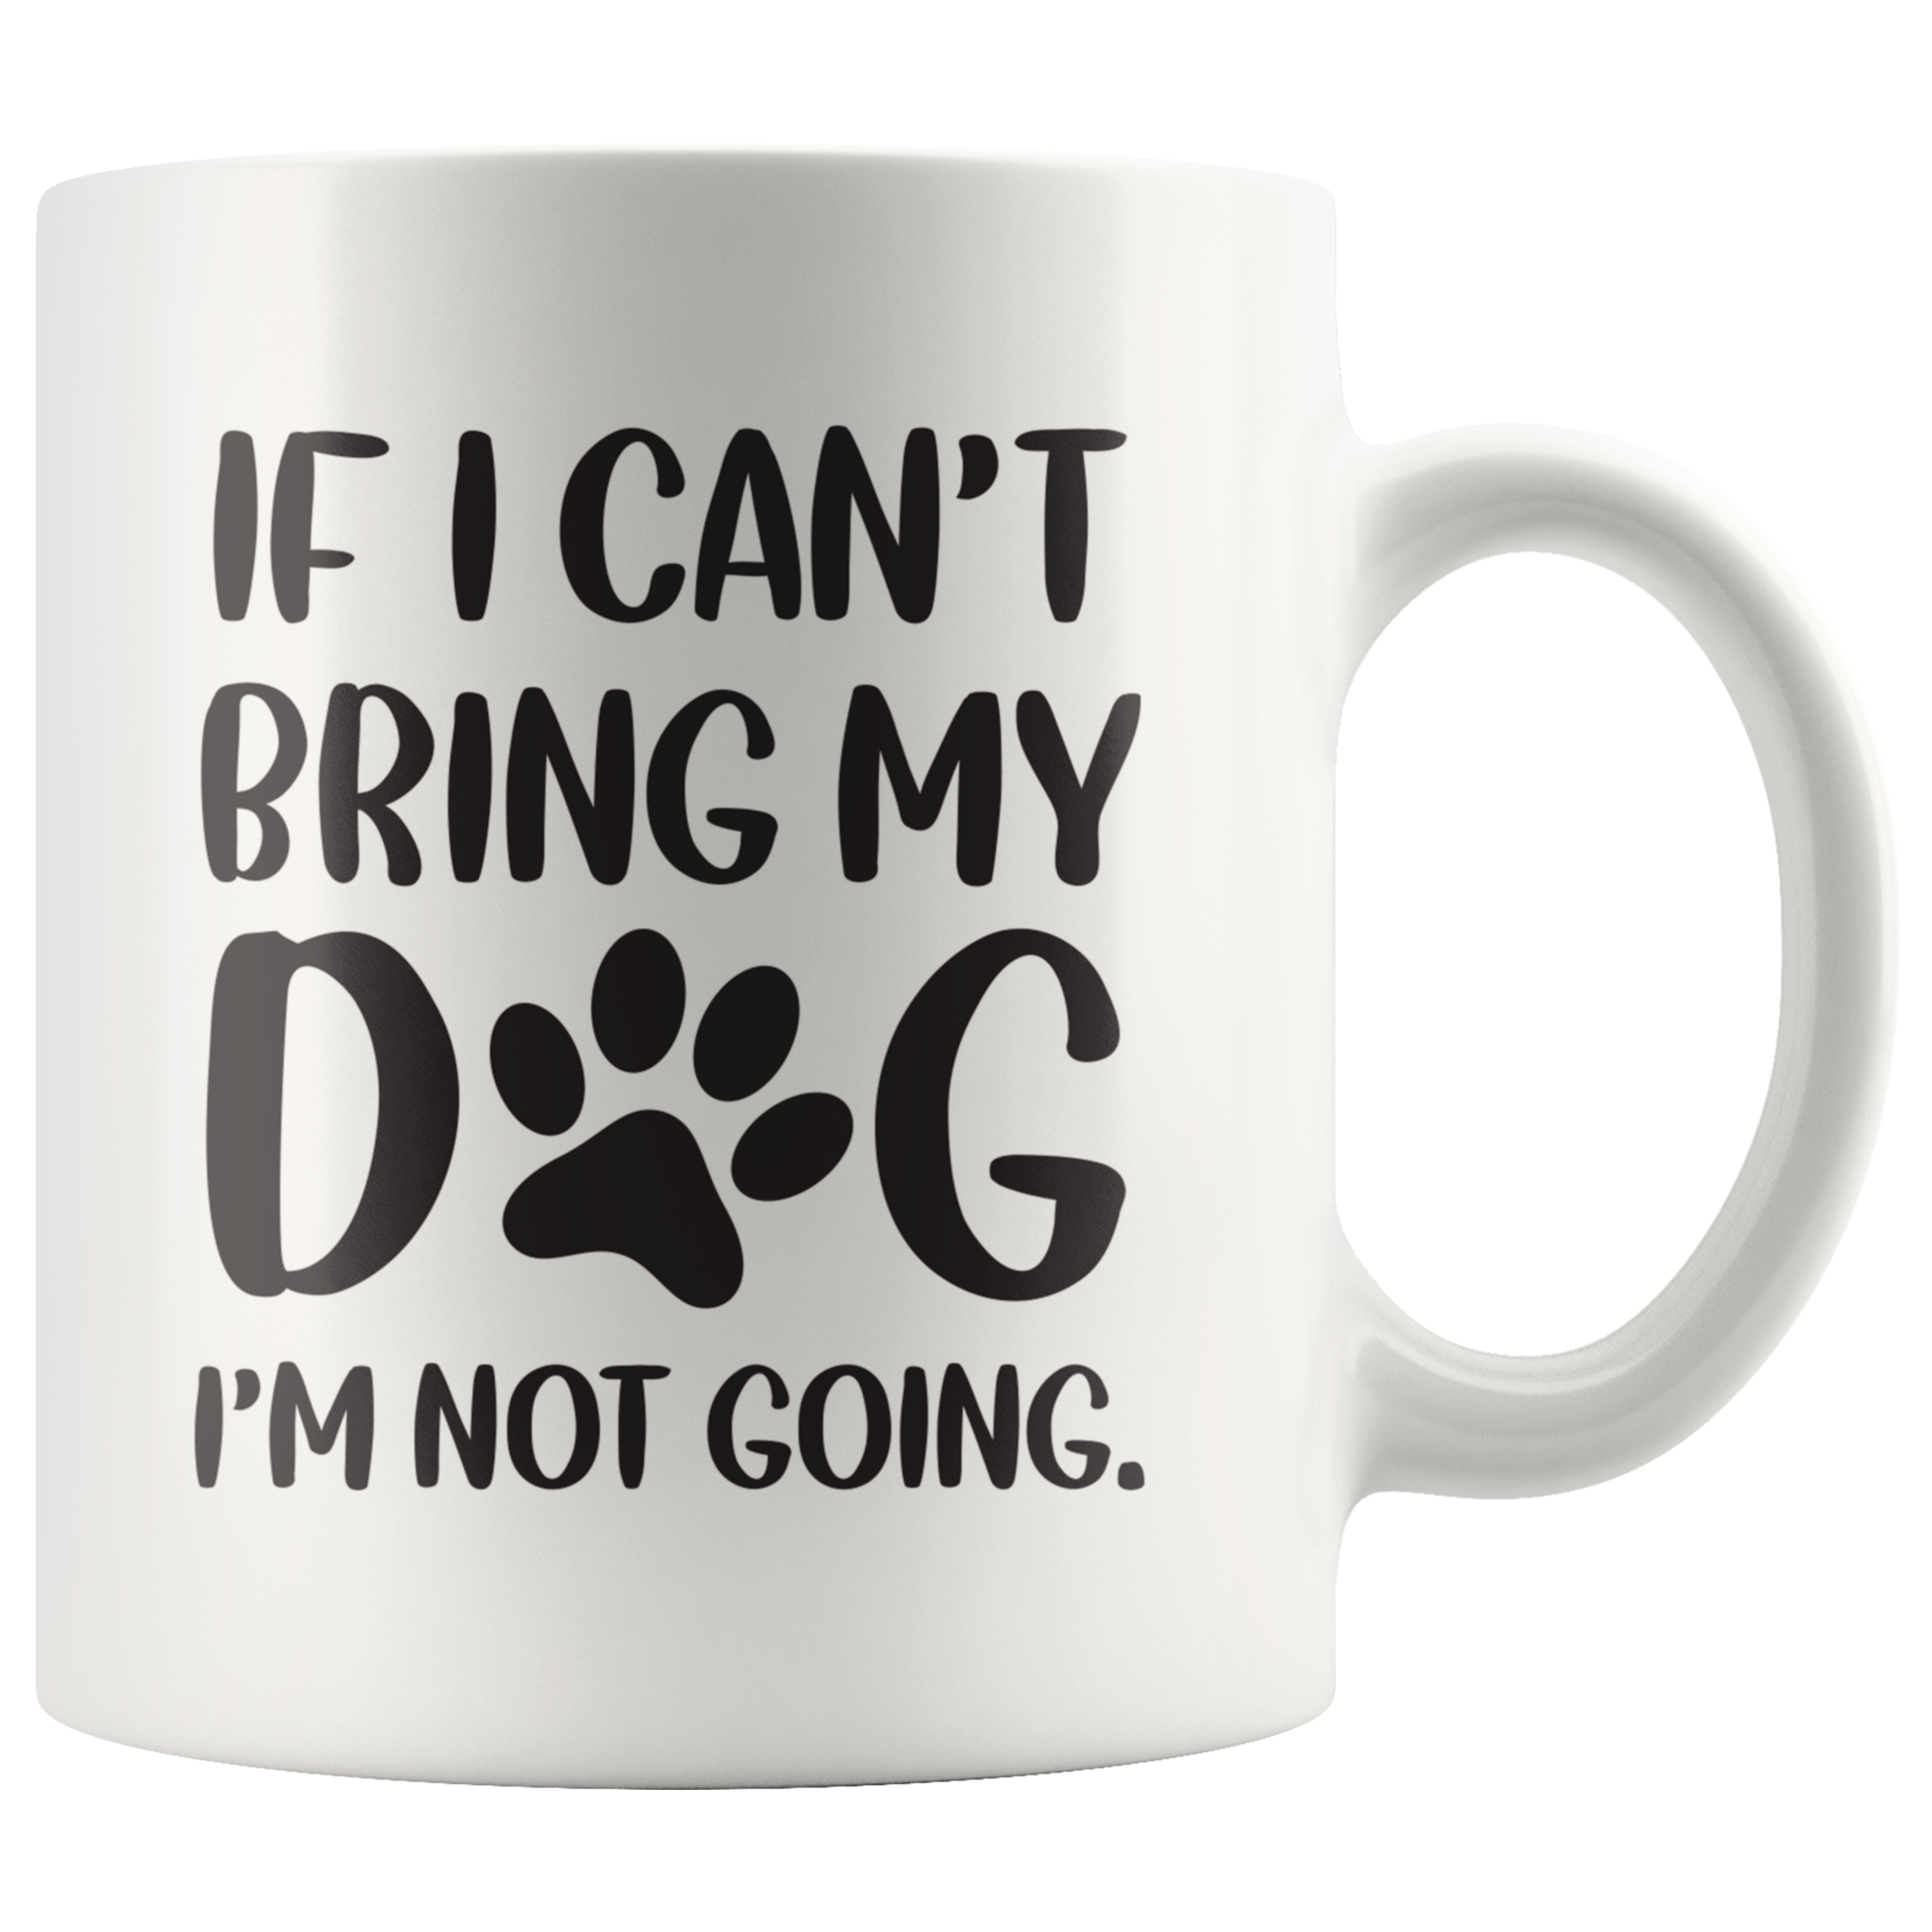 If I Cant Bring My Dog Coffee Mug